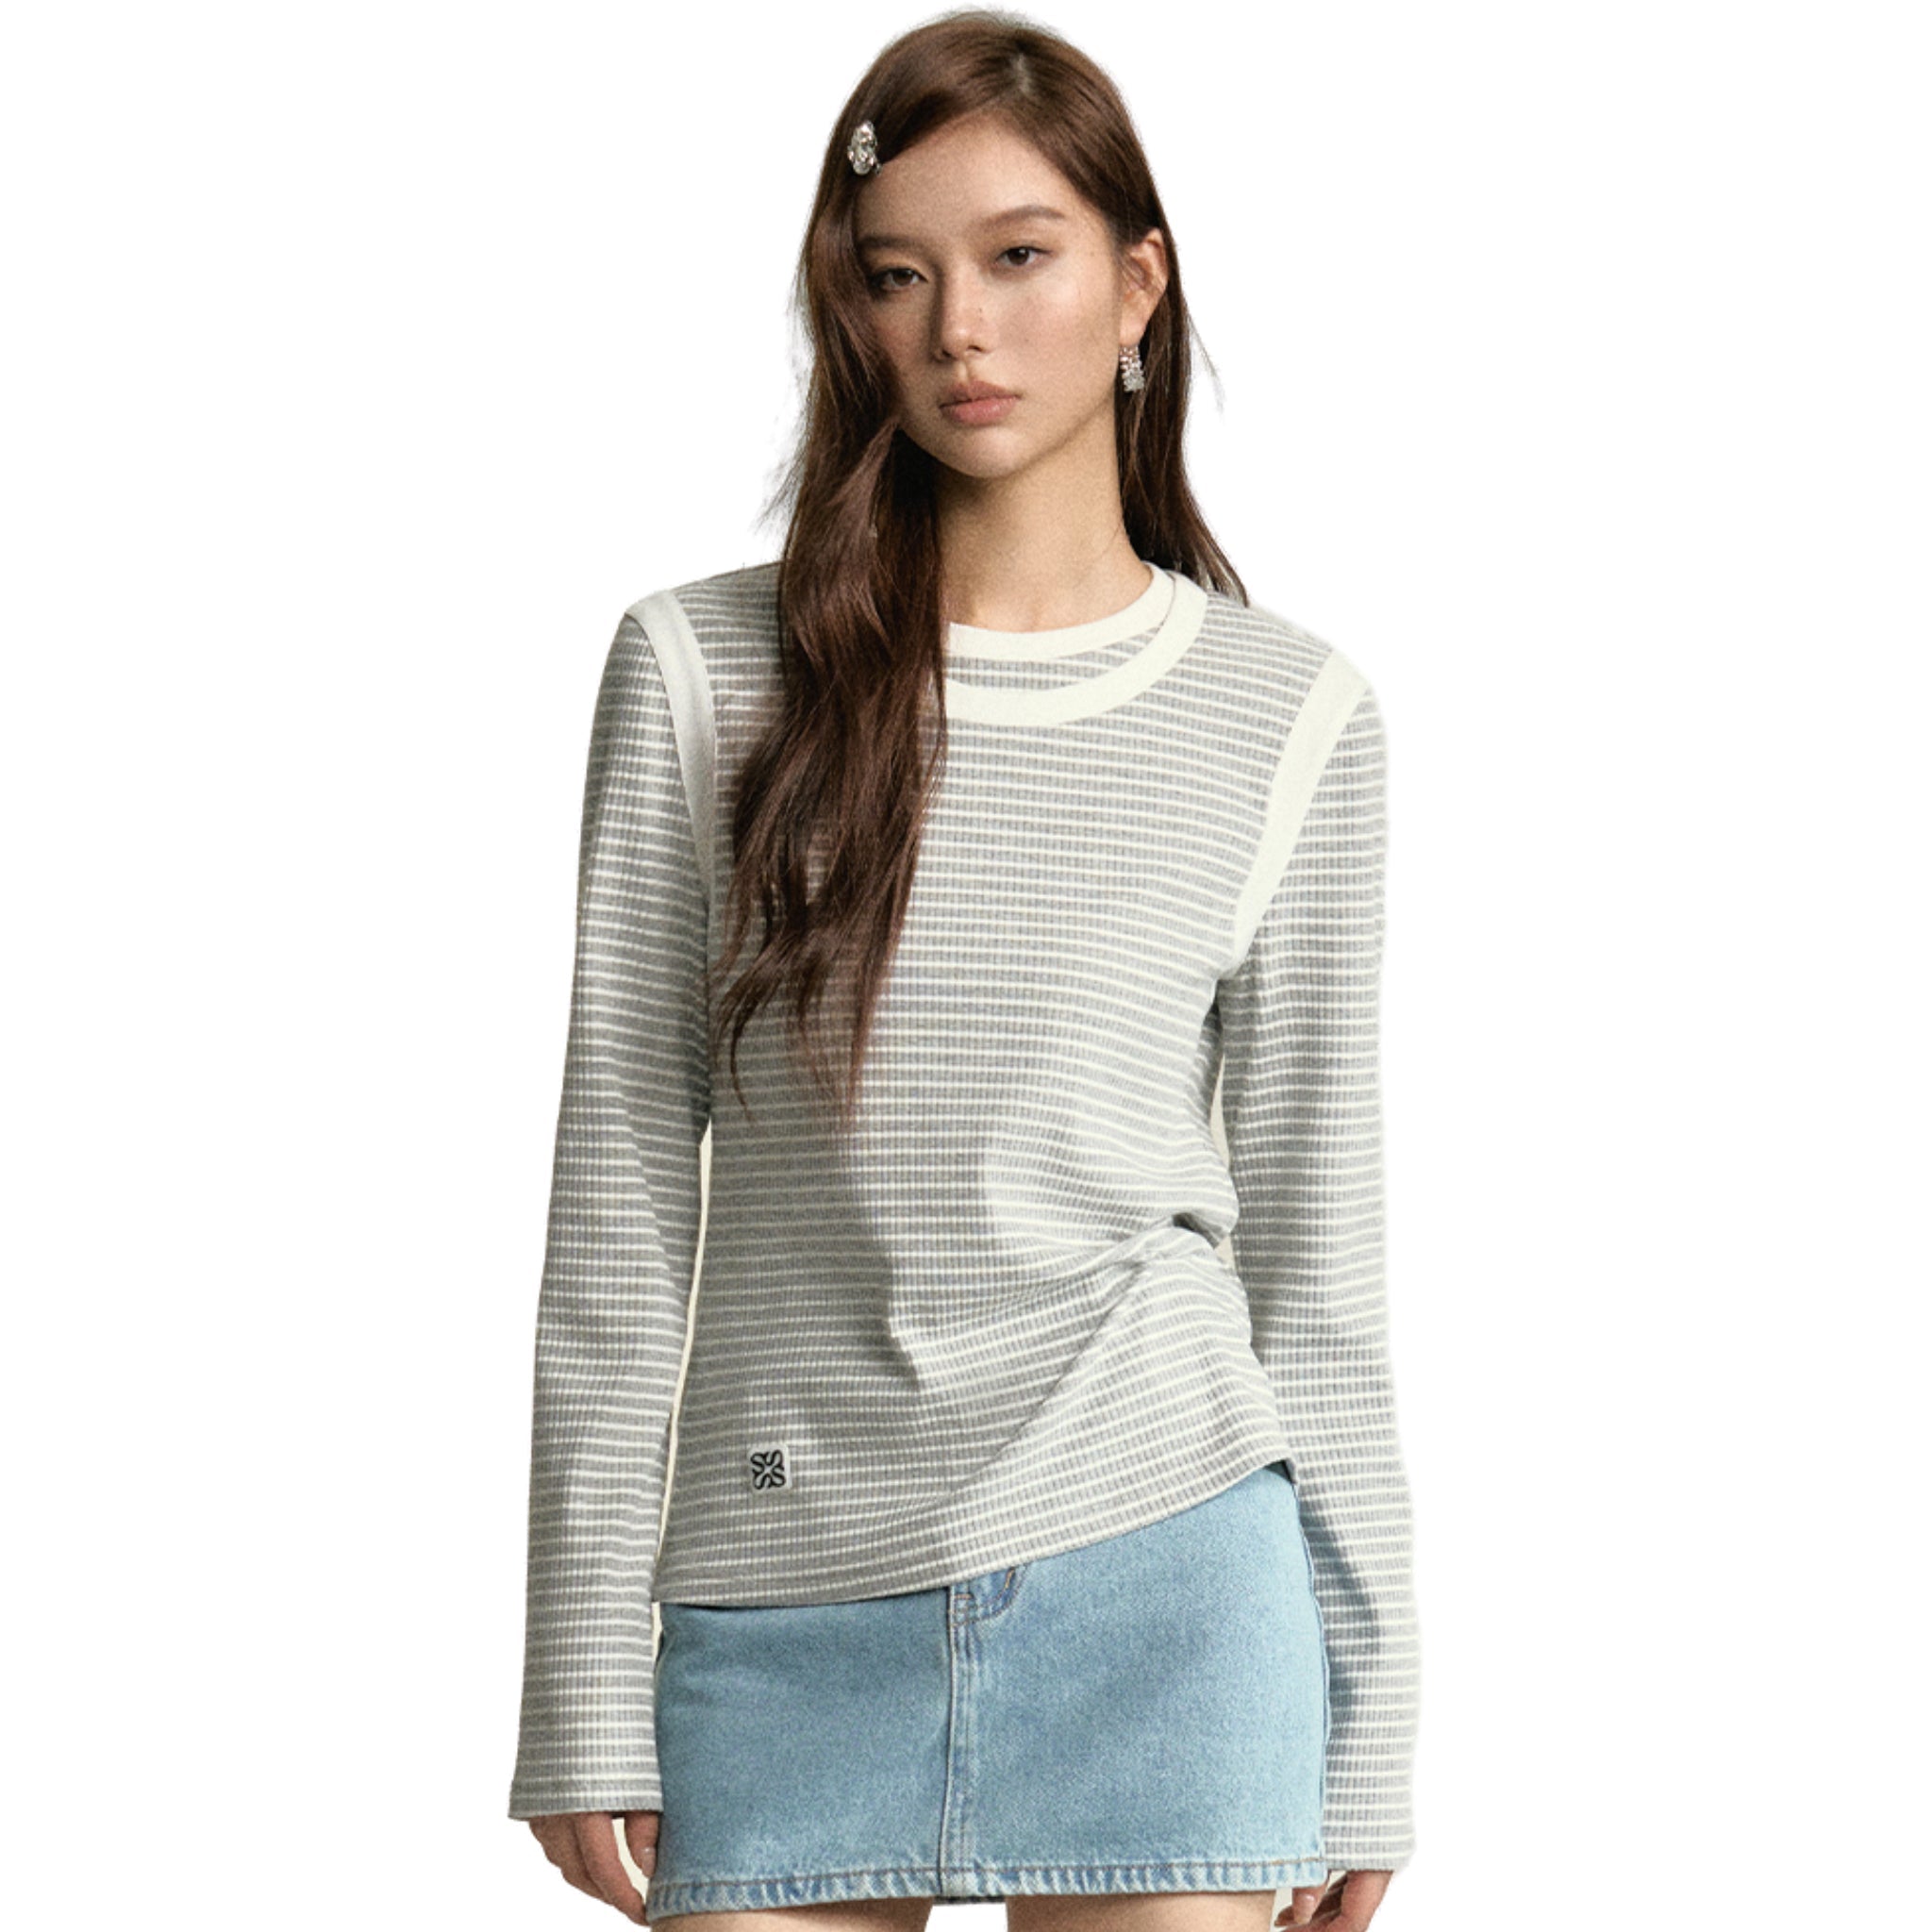 SOMESOWE Light Grey Strip Double Collar Long Sleeve T-shirt | MADA IN CHINA